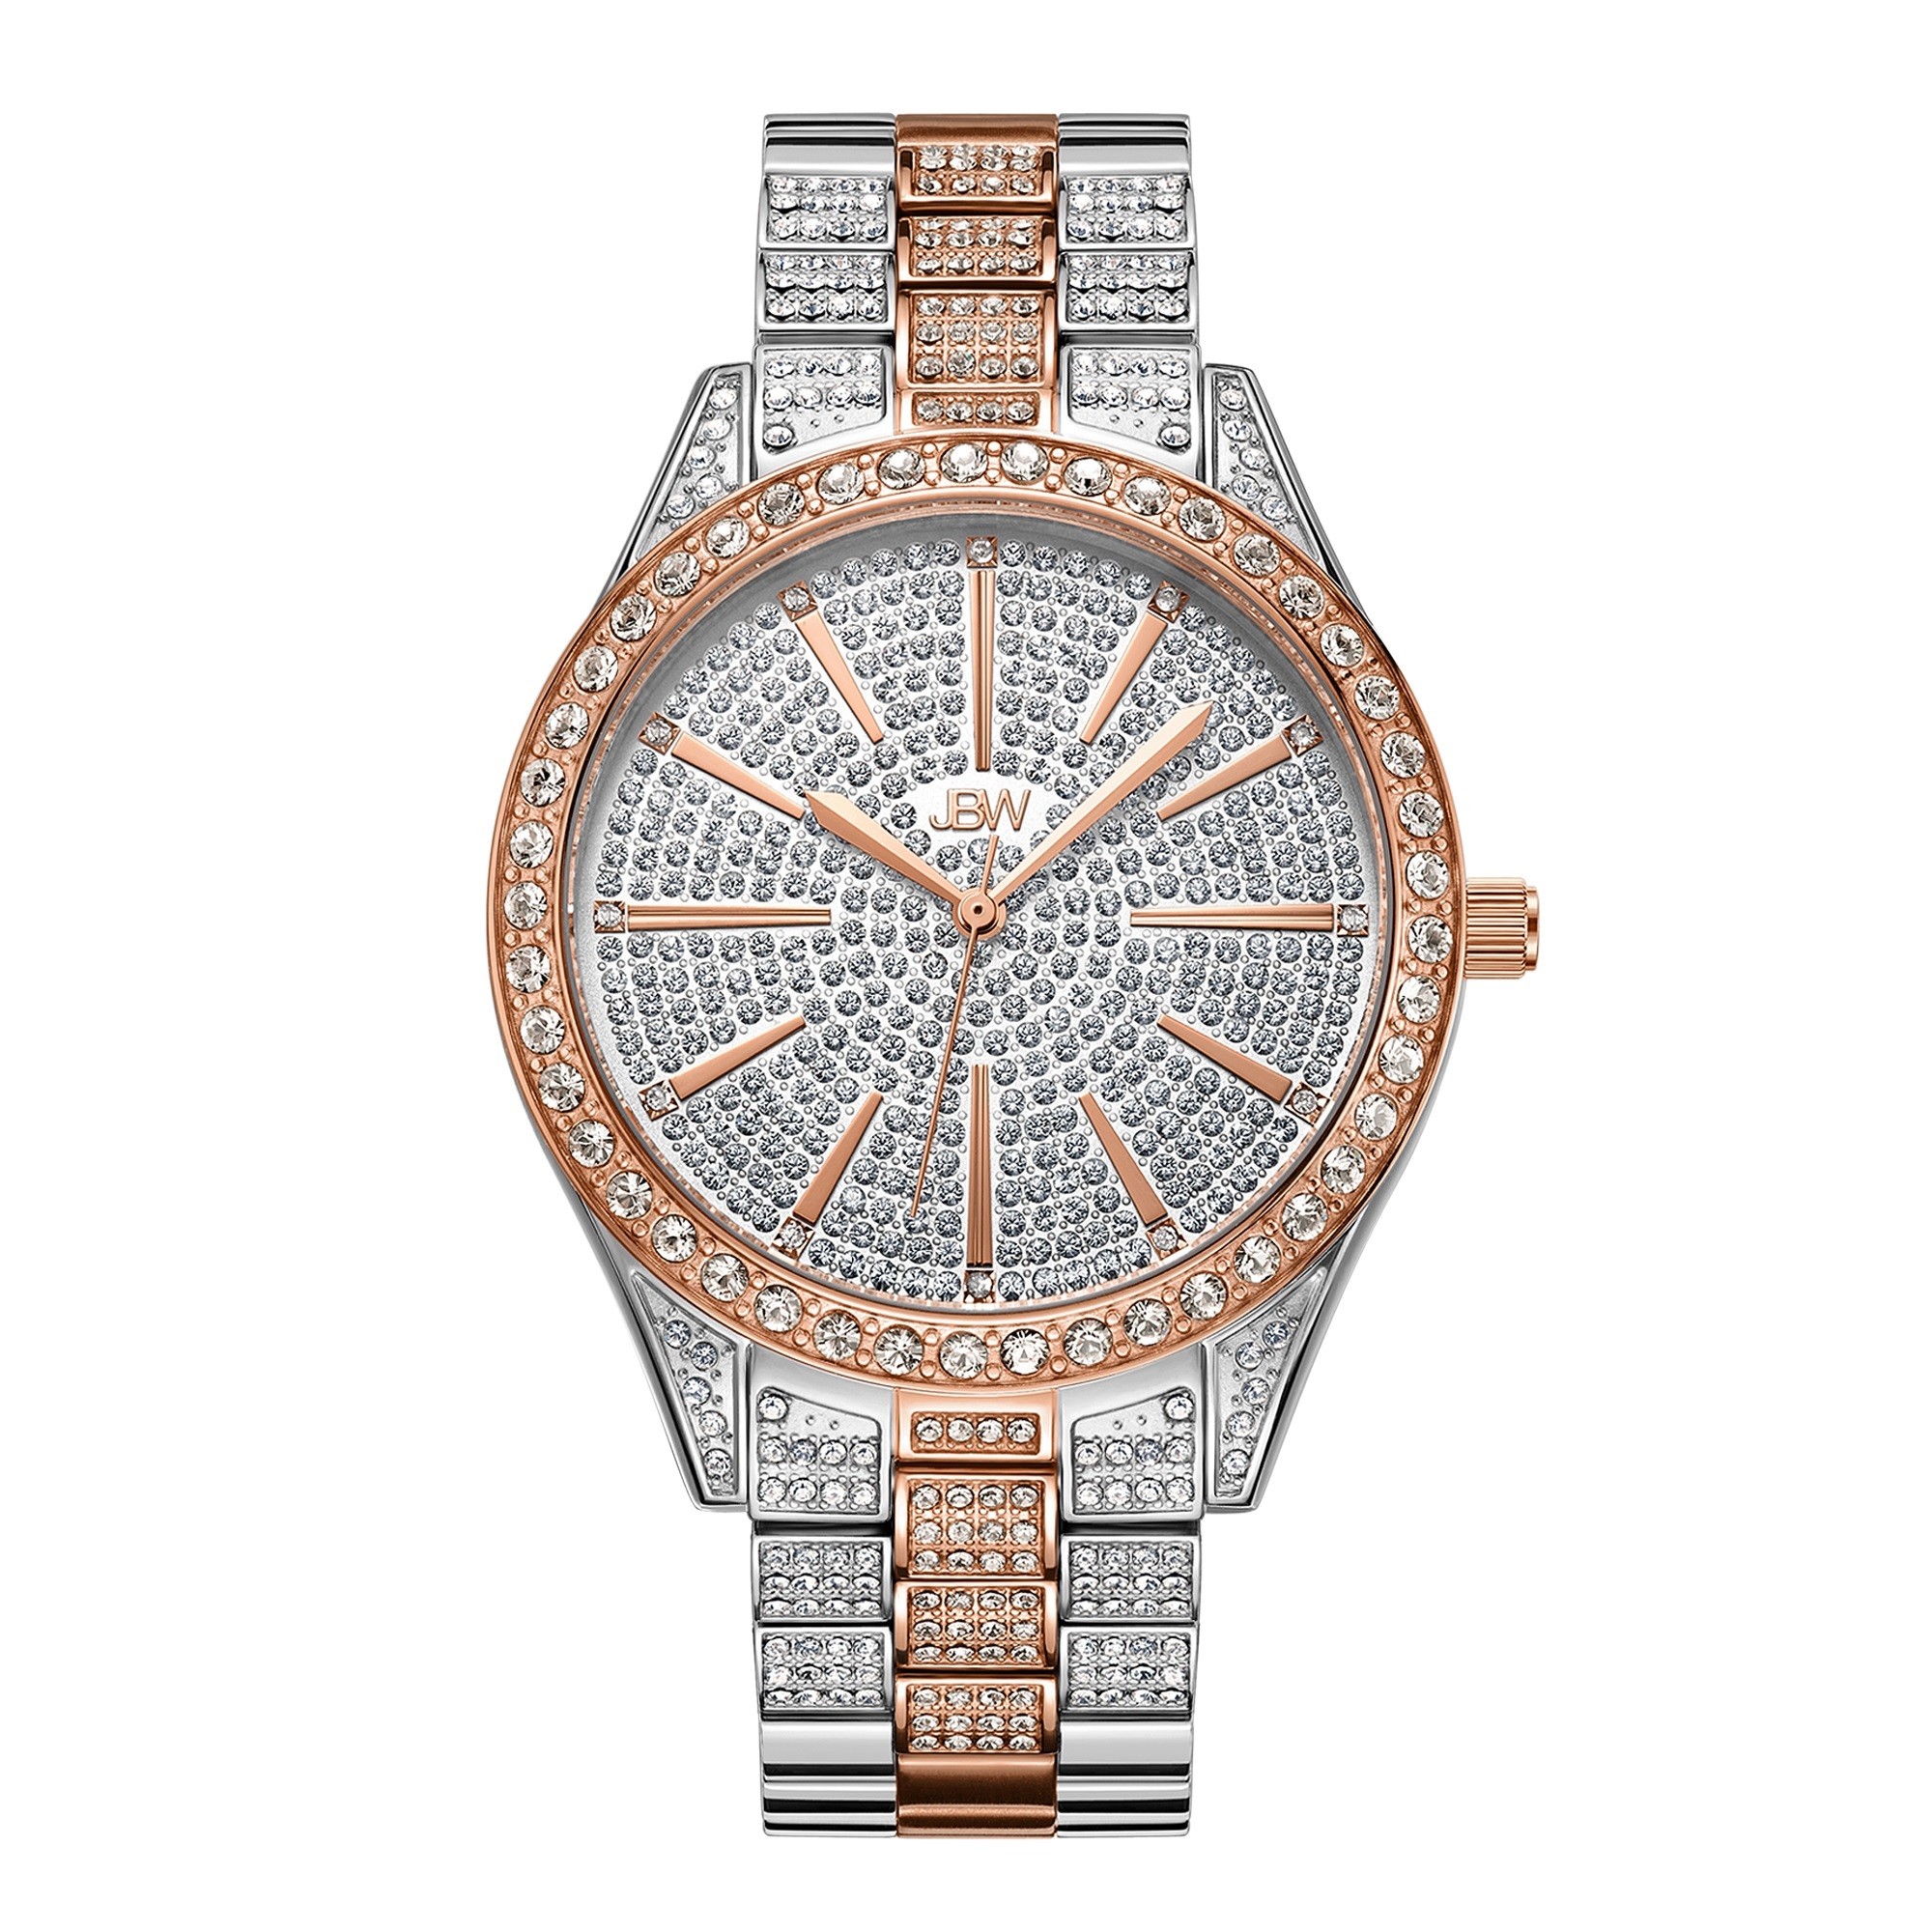 JBW Women's Cristal 0.12 ctw Diamond Stainless Steel Watch J6346E